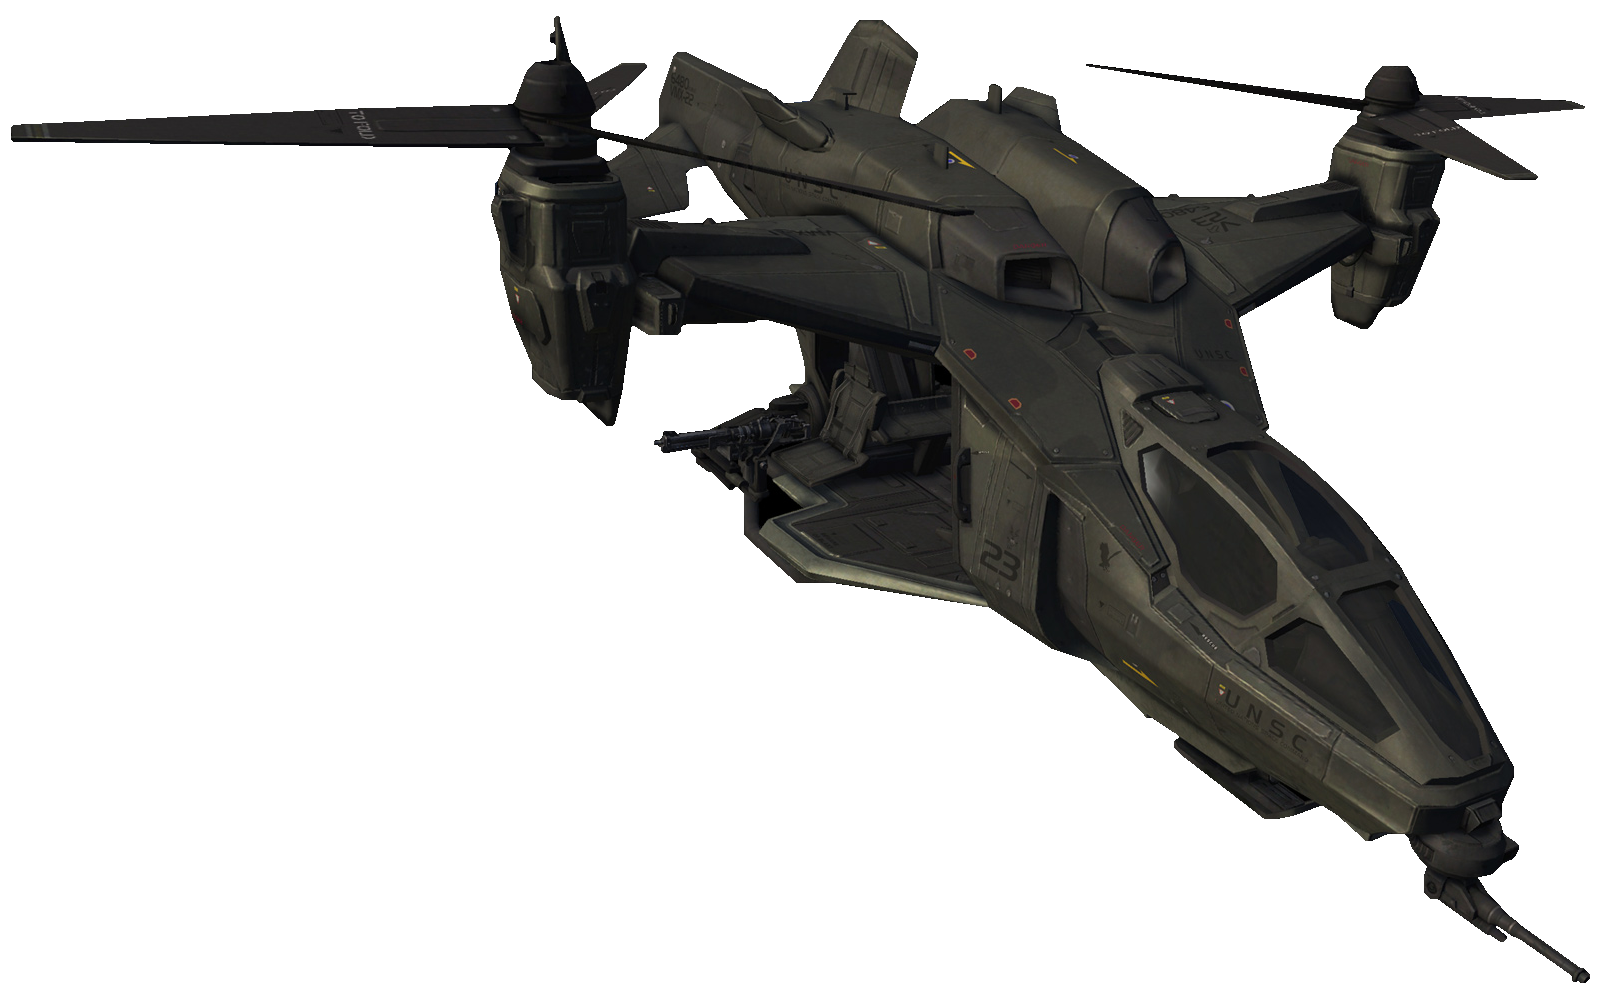 【HALO设定科普】UH-144猎鹰号通用直升机 —— 空中快车